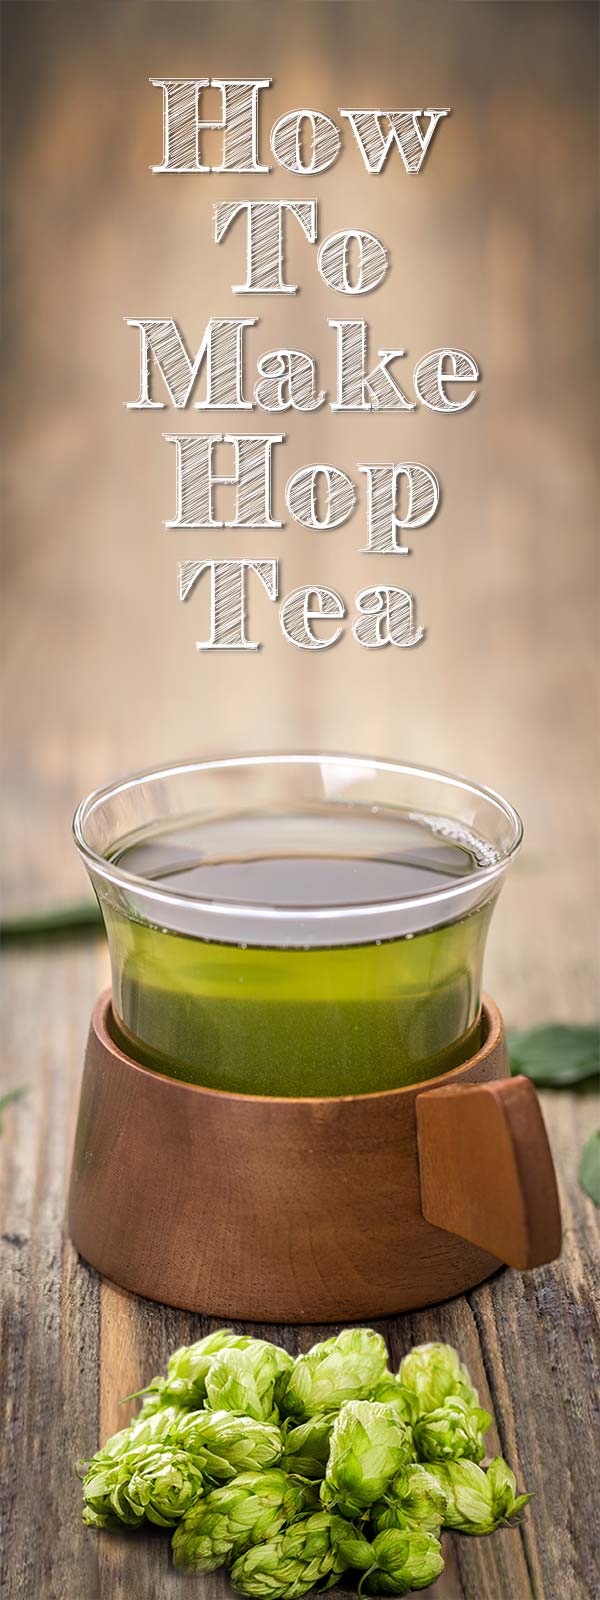 How to Make Hop Tea